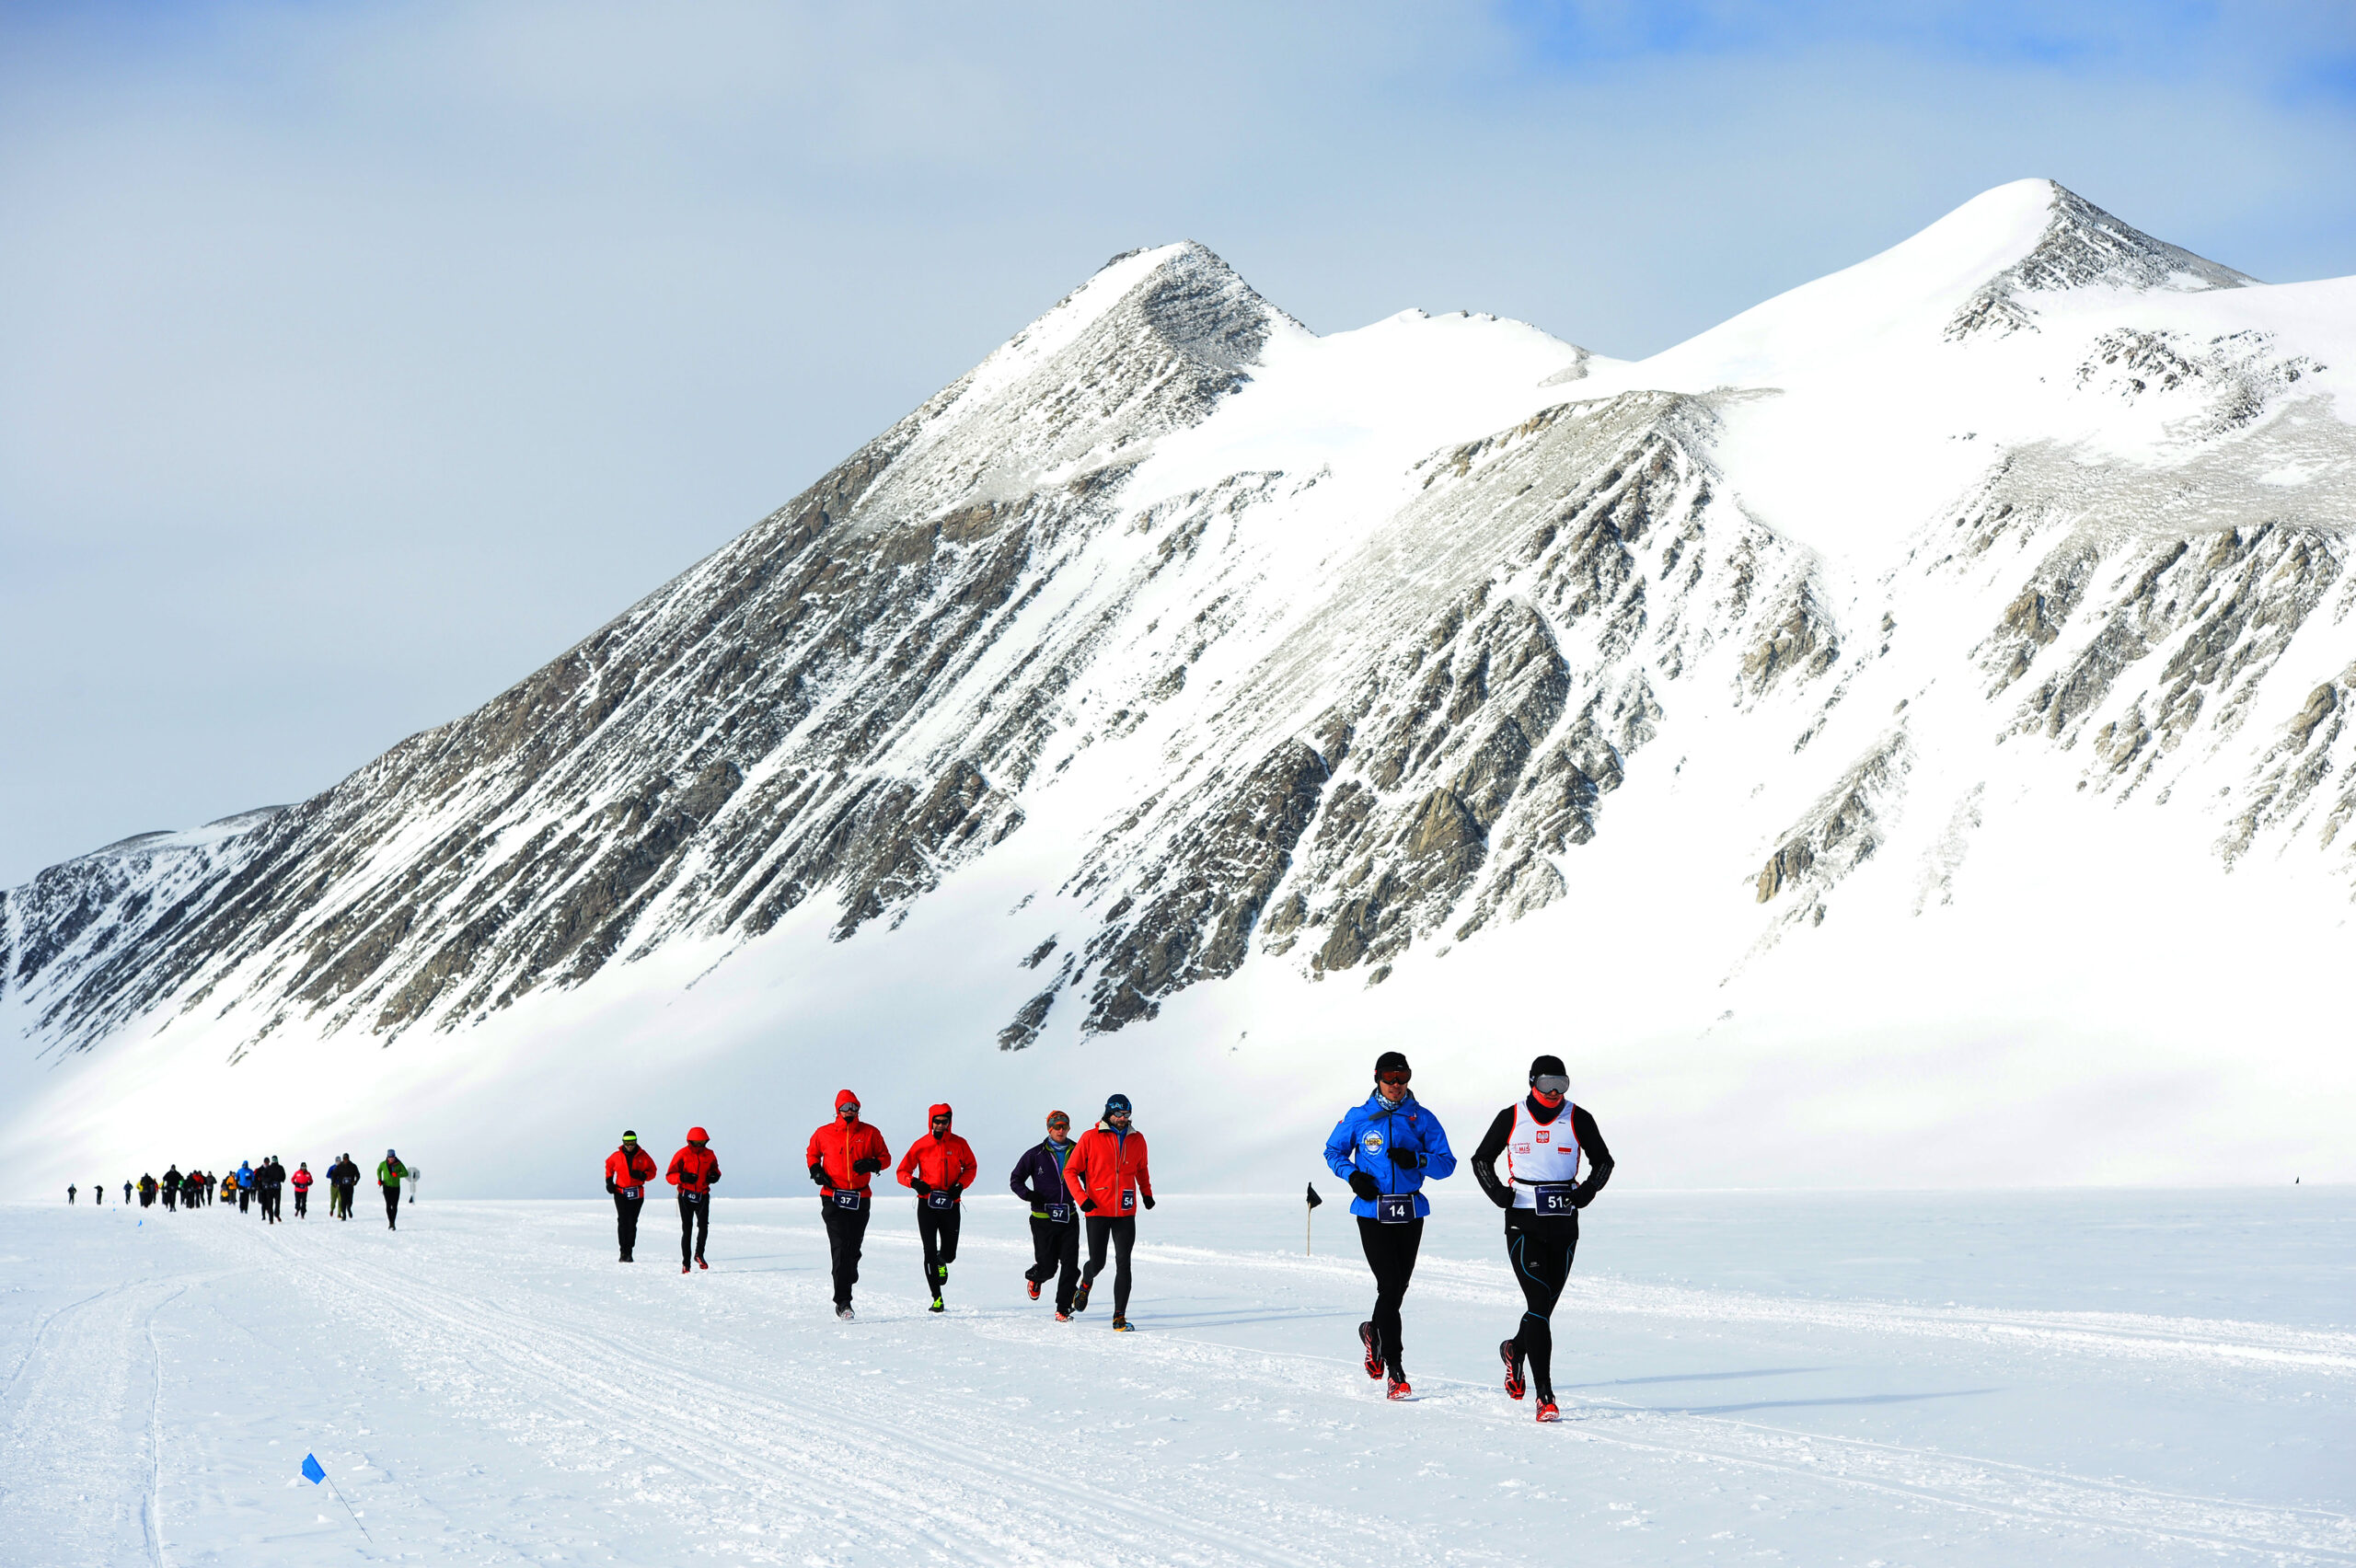 The Antarctic Ice Marathon